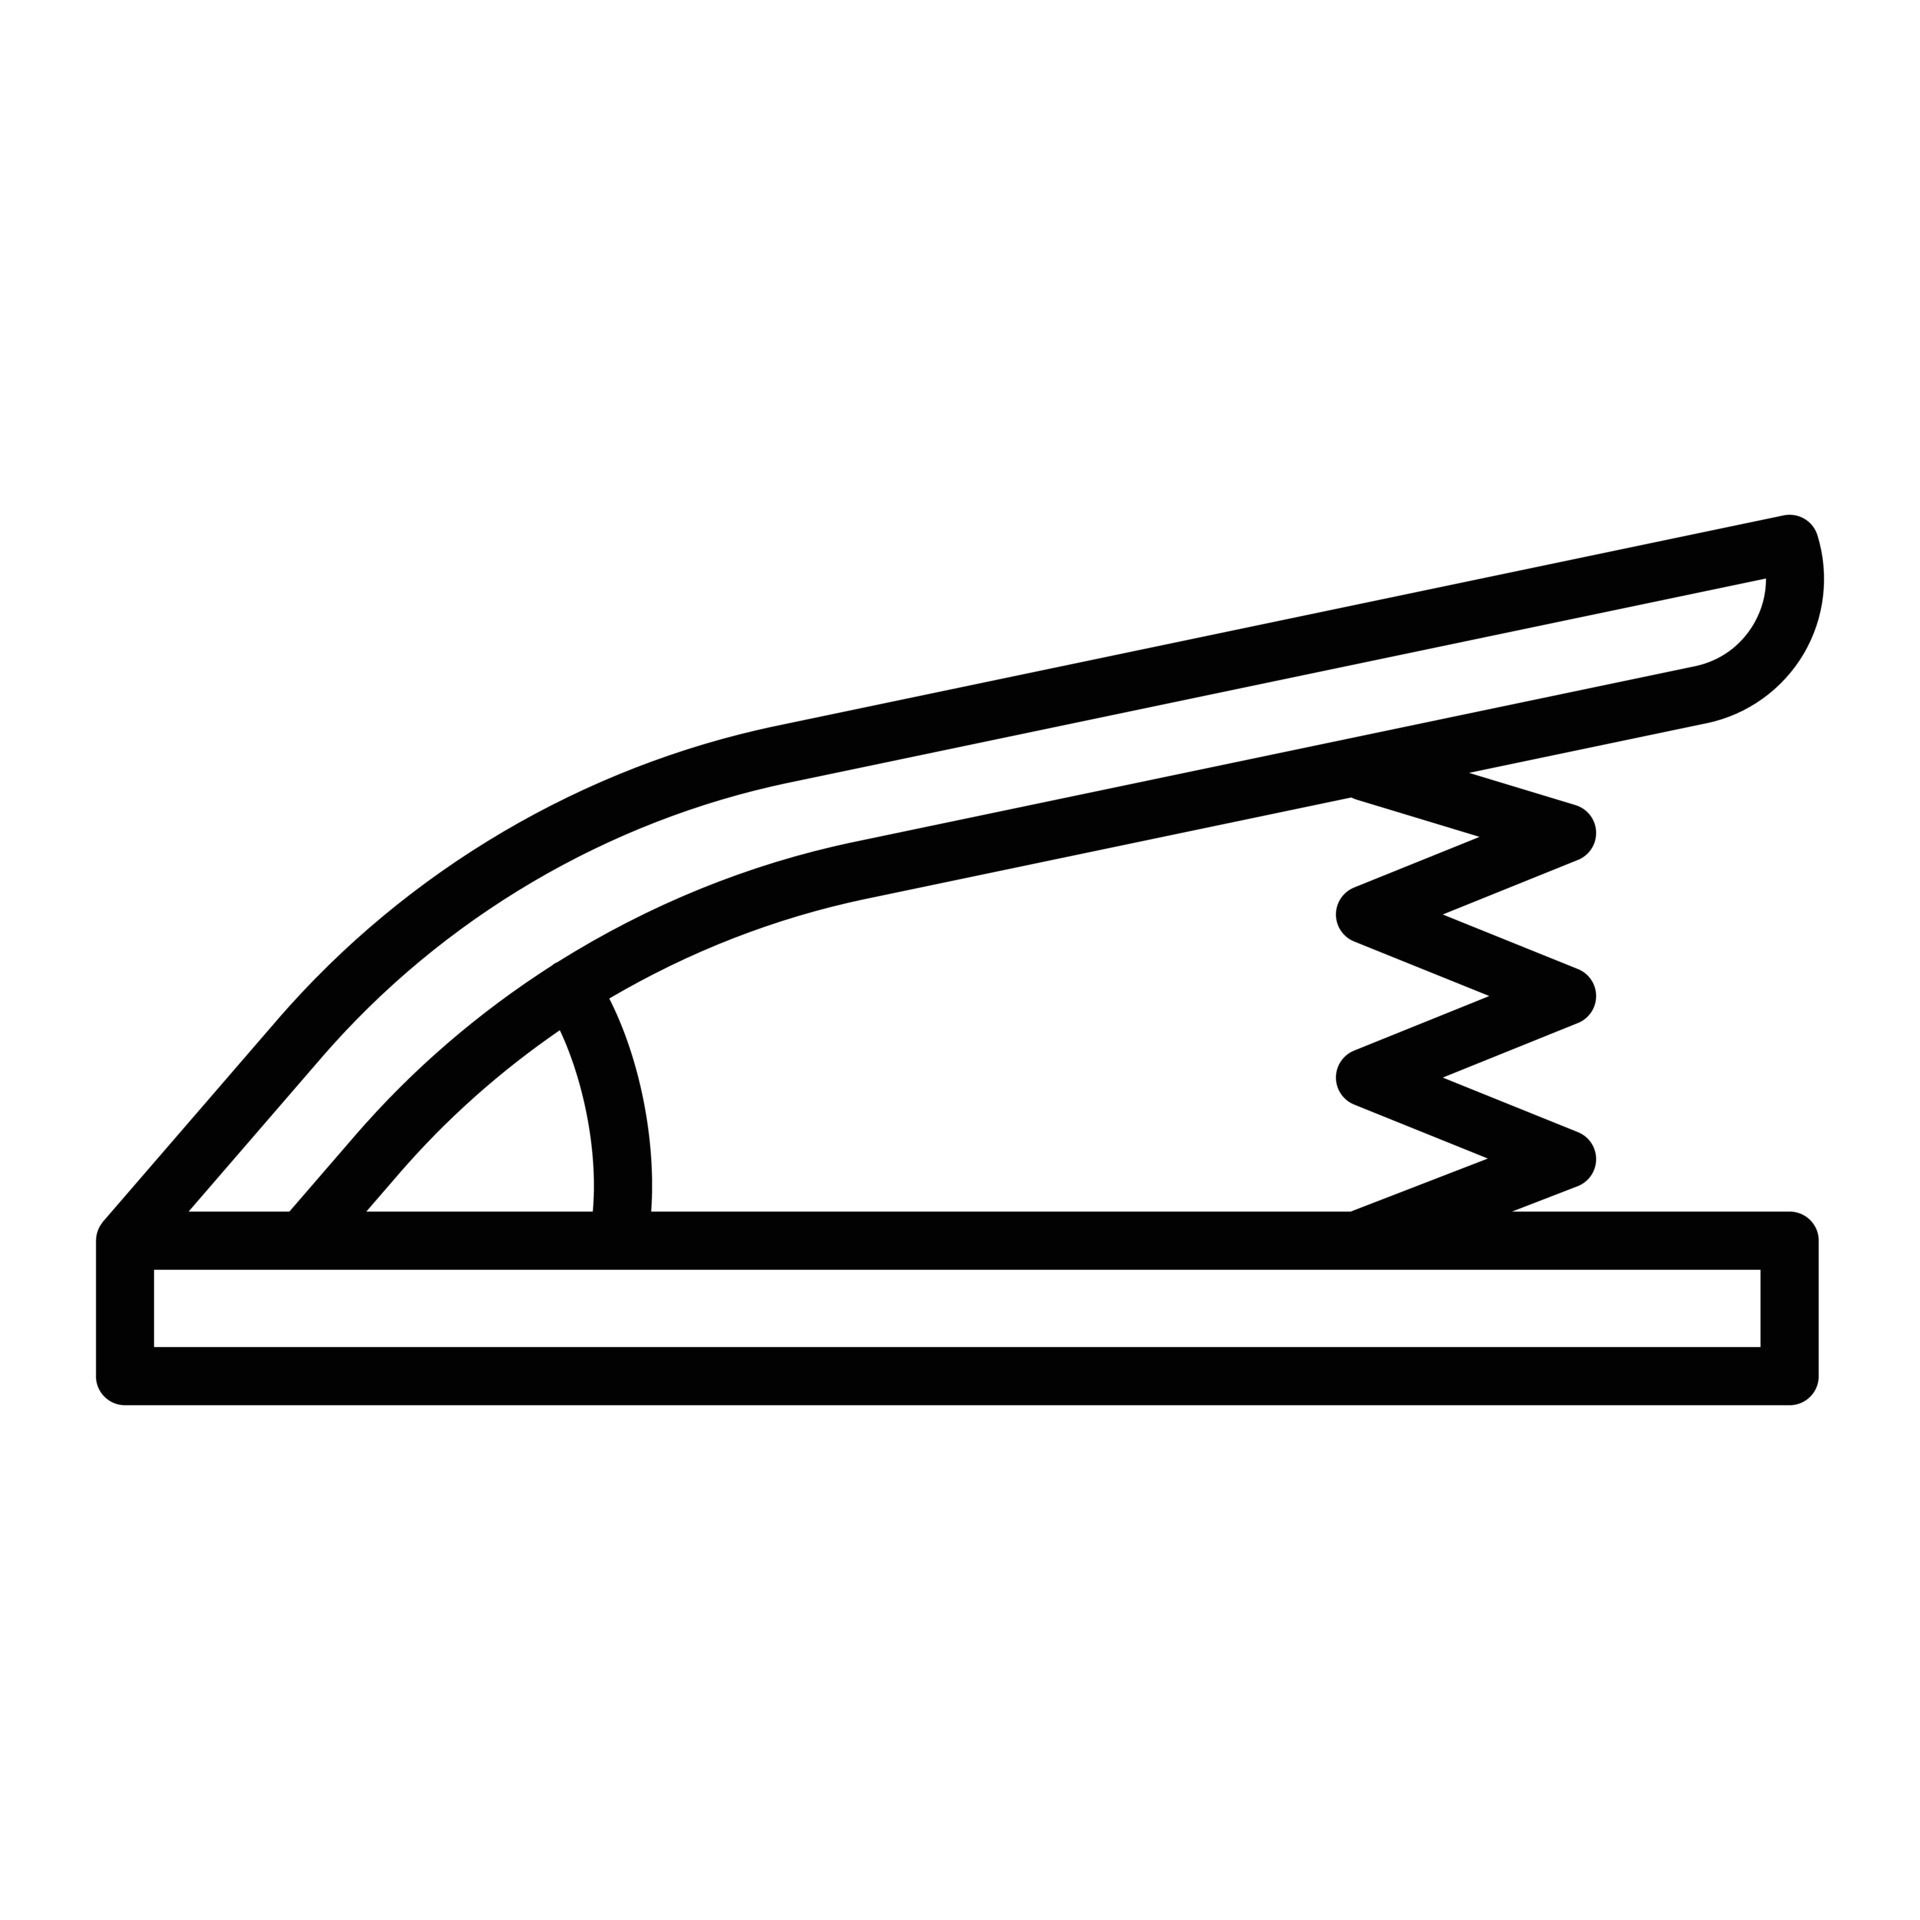 icône de tremplin de gymnastique, style de contour 14315985 Art